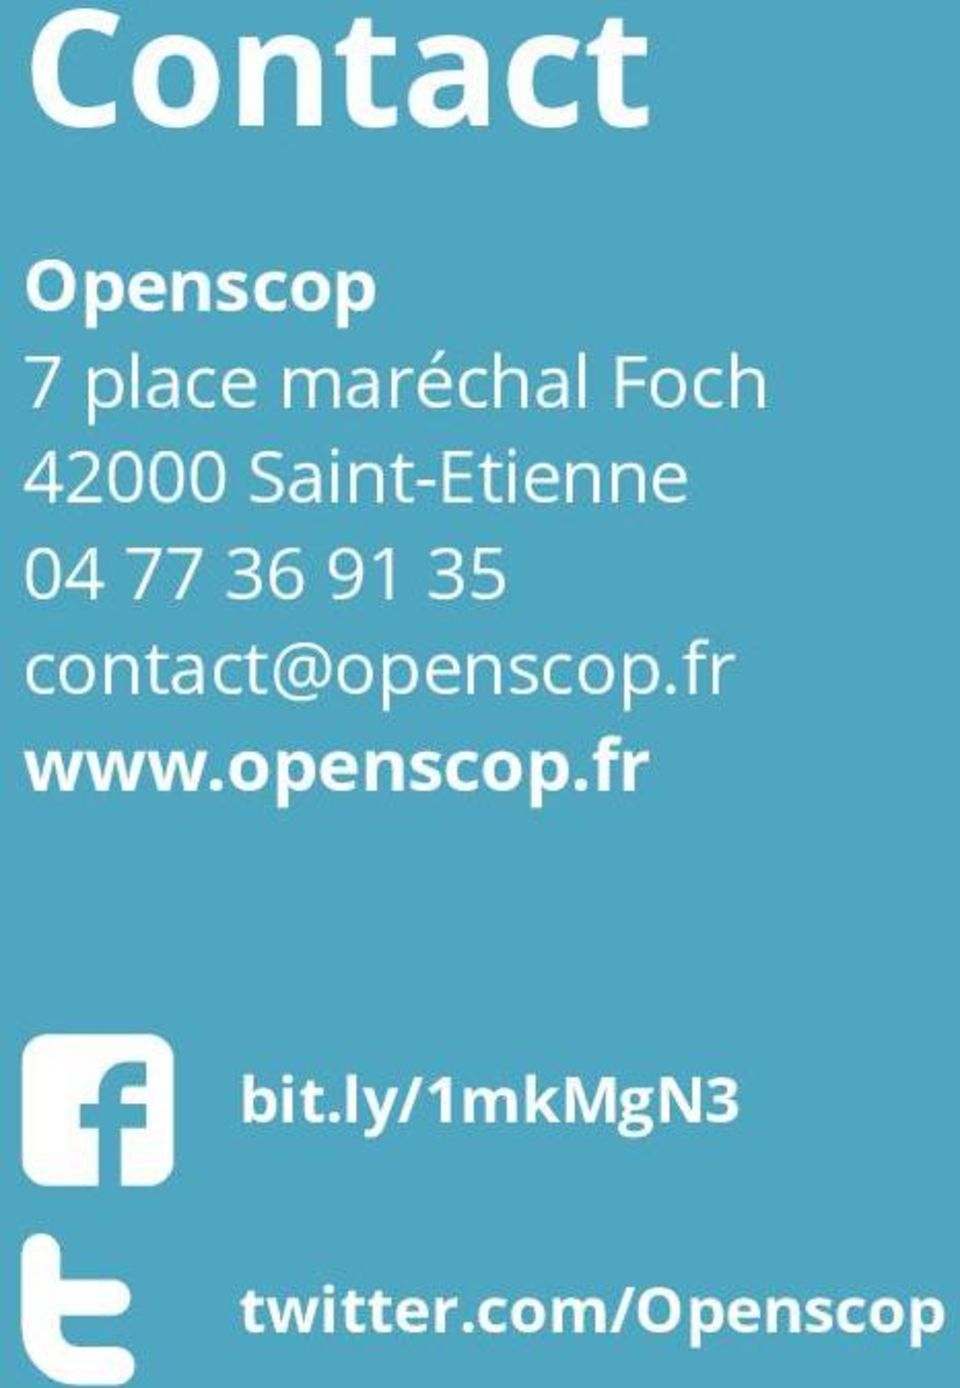 35 contact@openscop.fr www.openscop.fr bit.